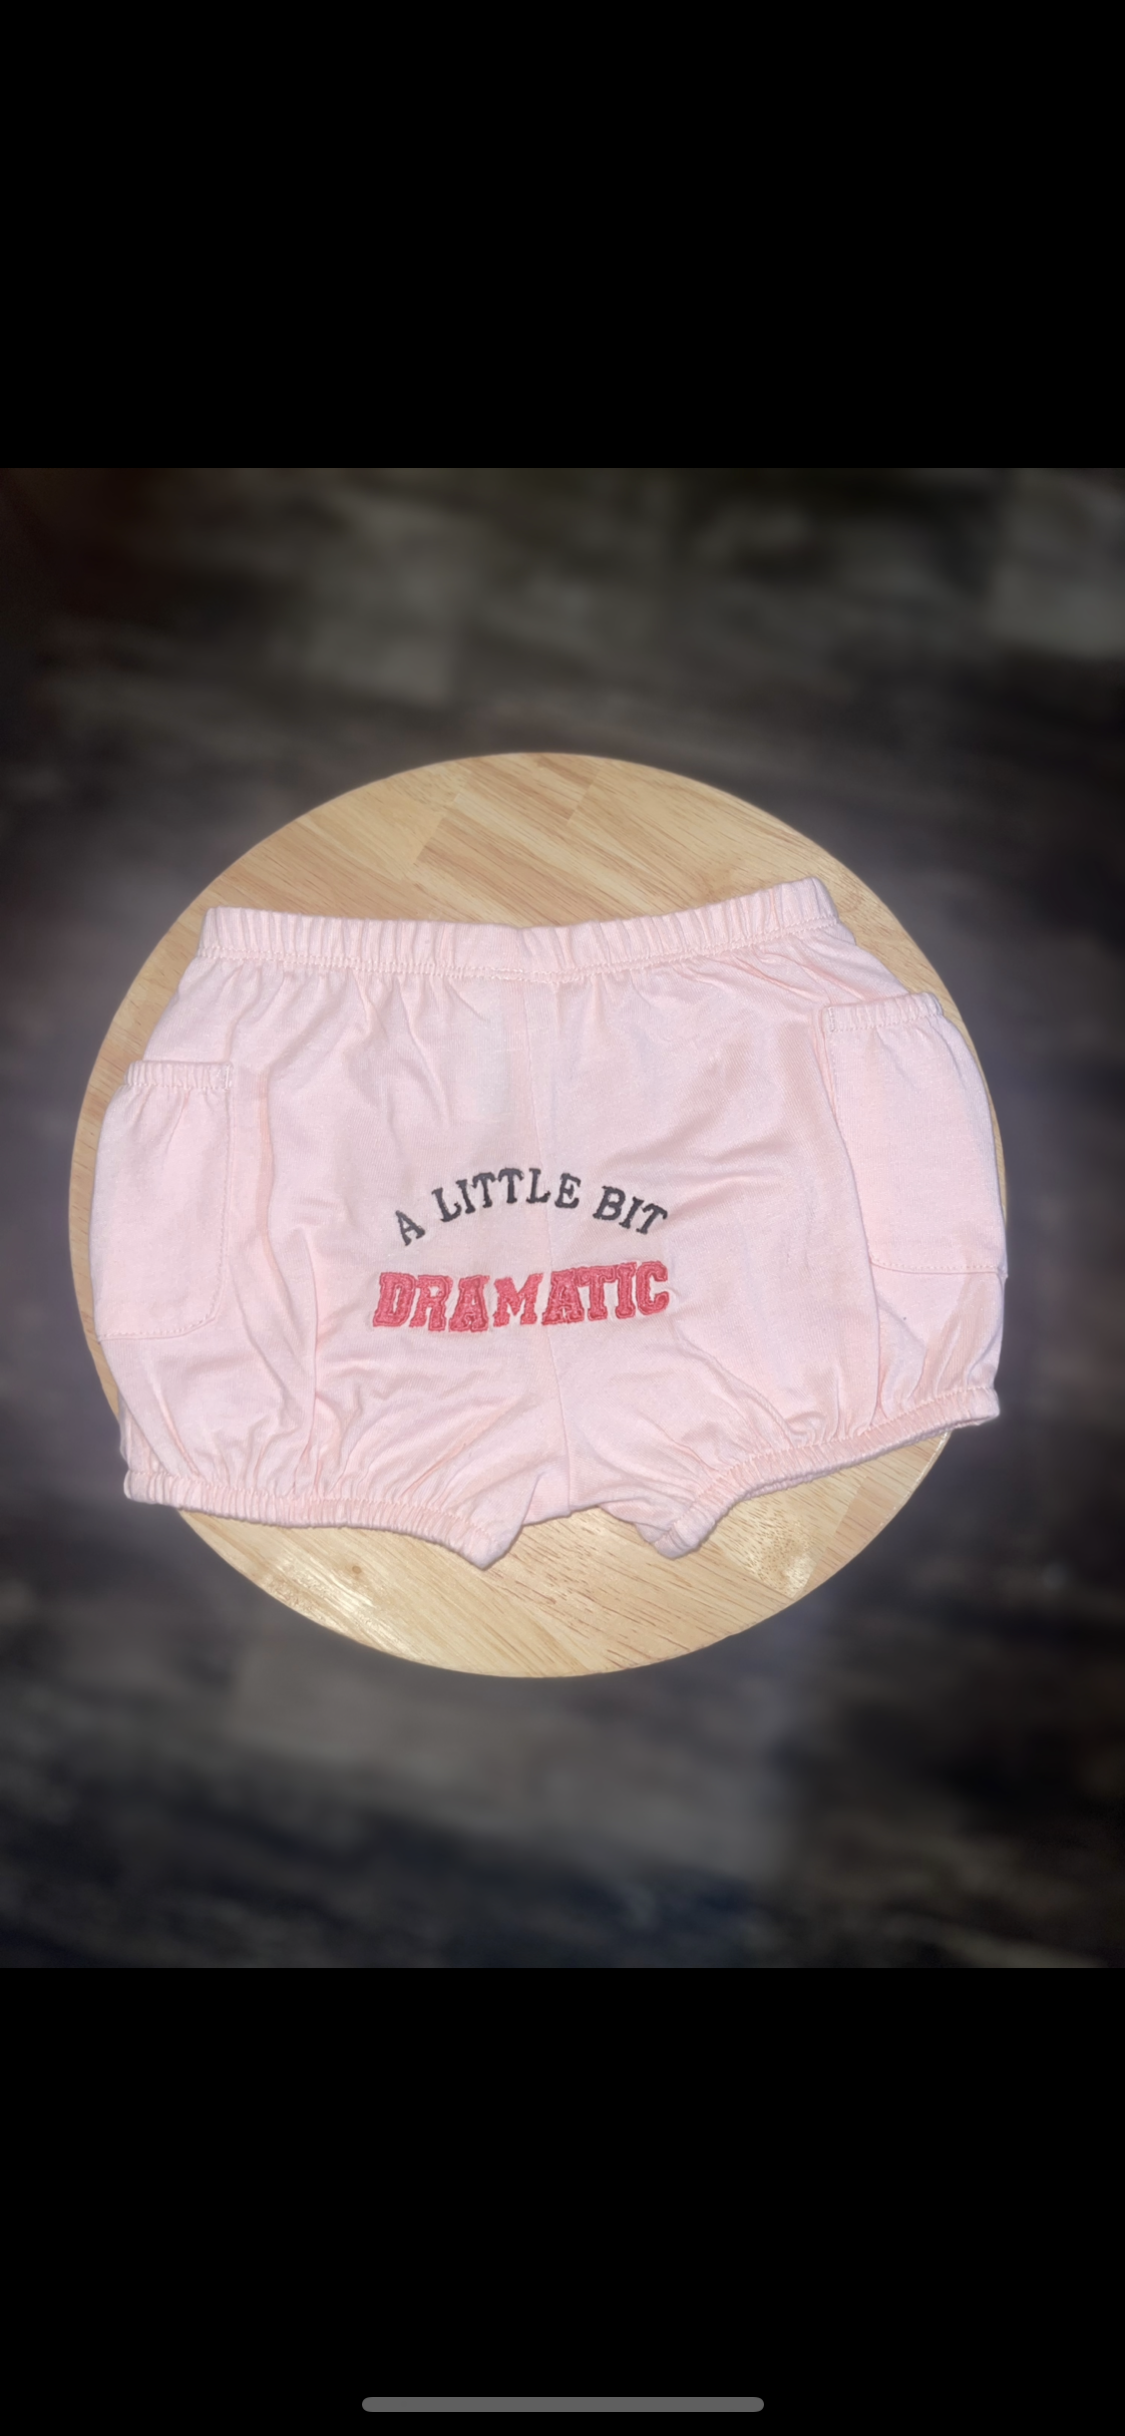 A little bit dramatic baby shorts